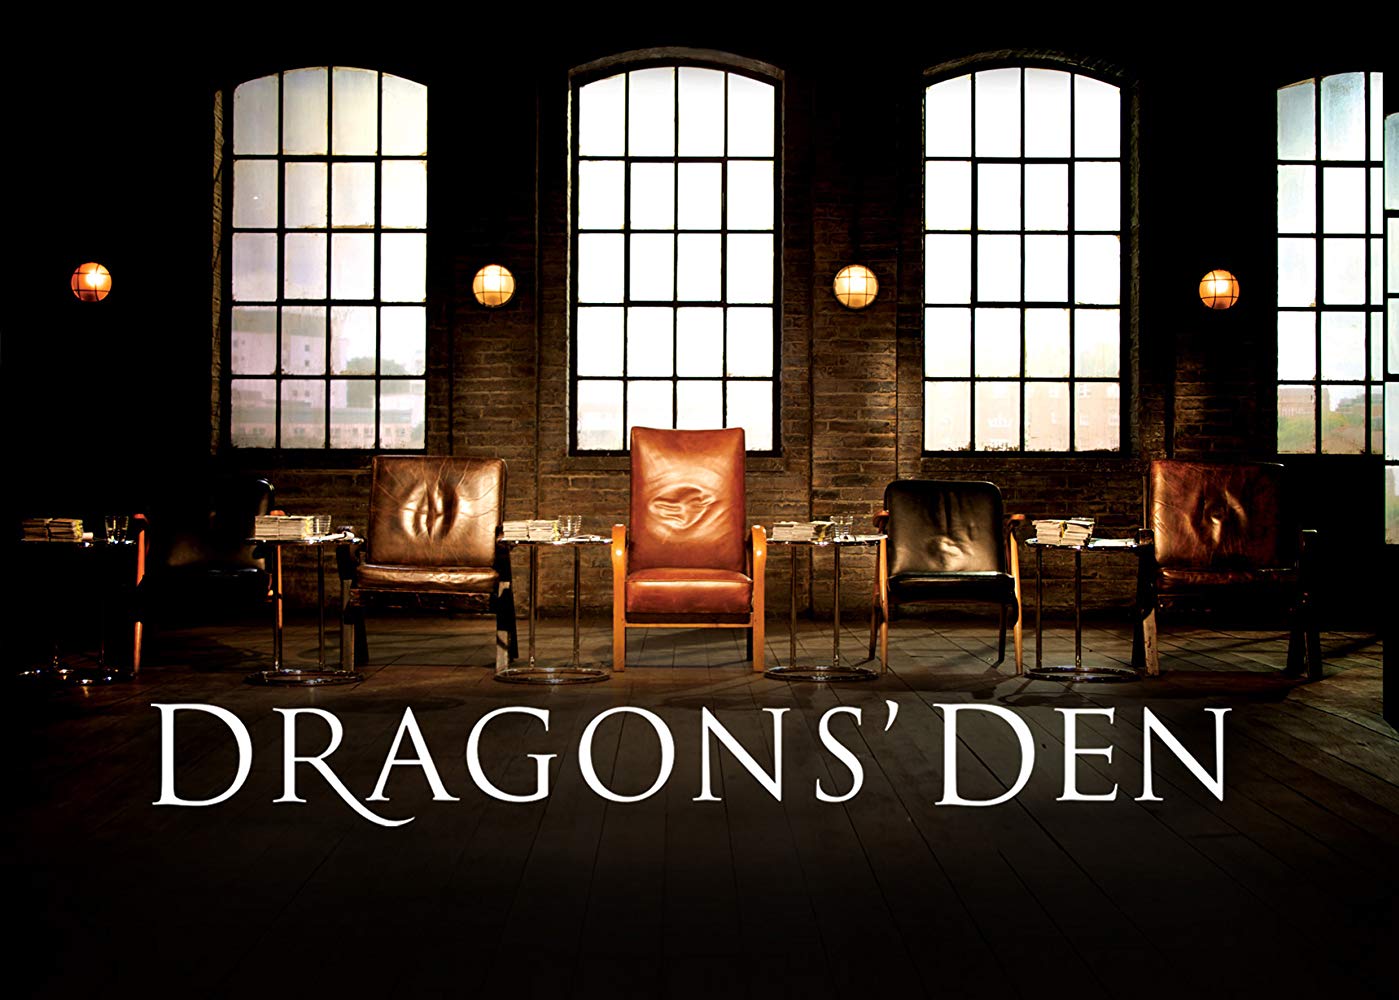 Watch Dragons' Den - Season 16